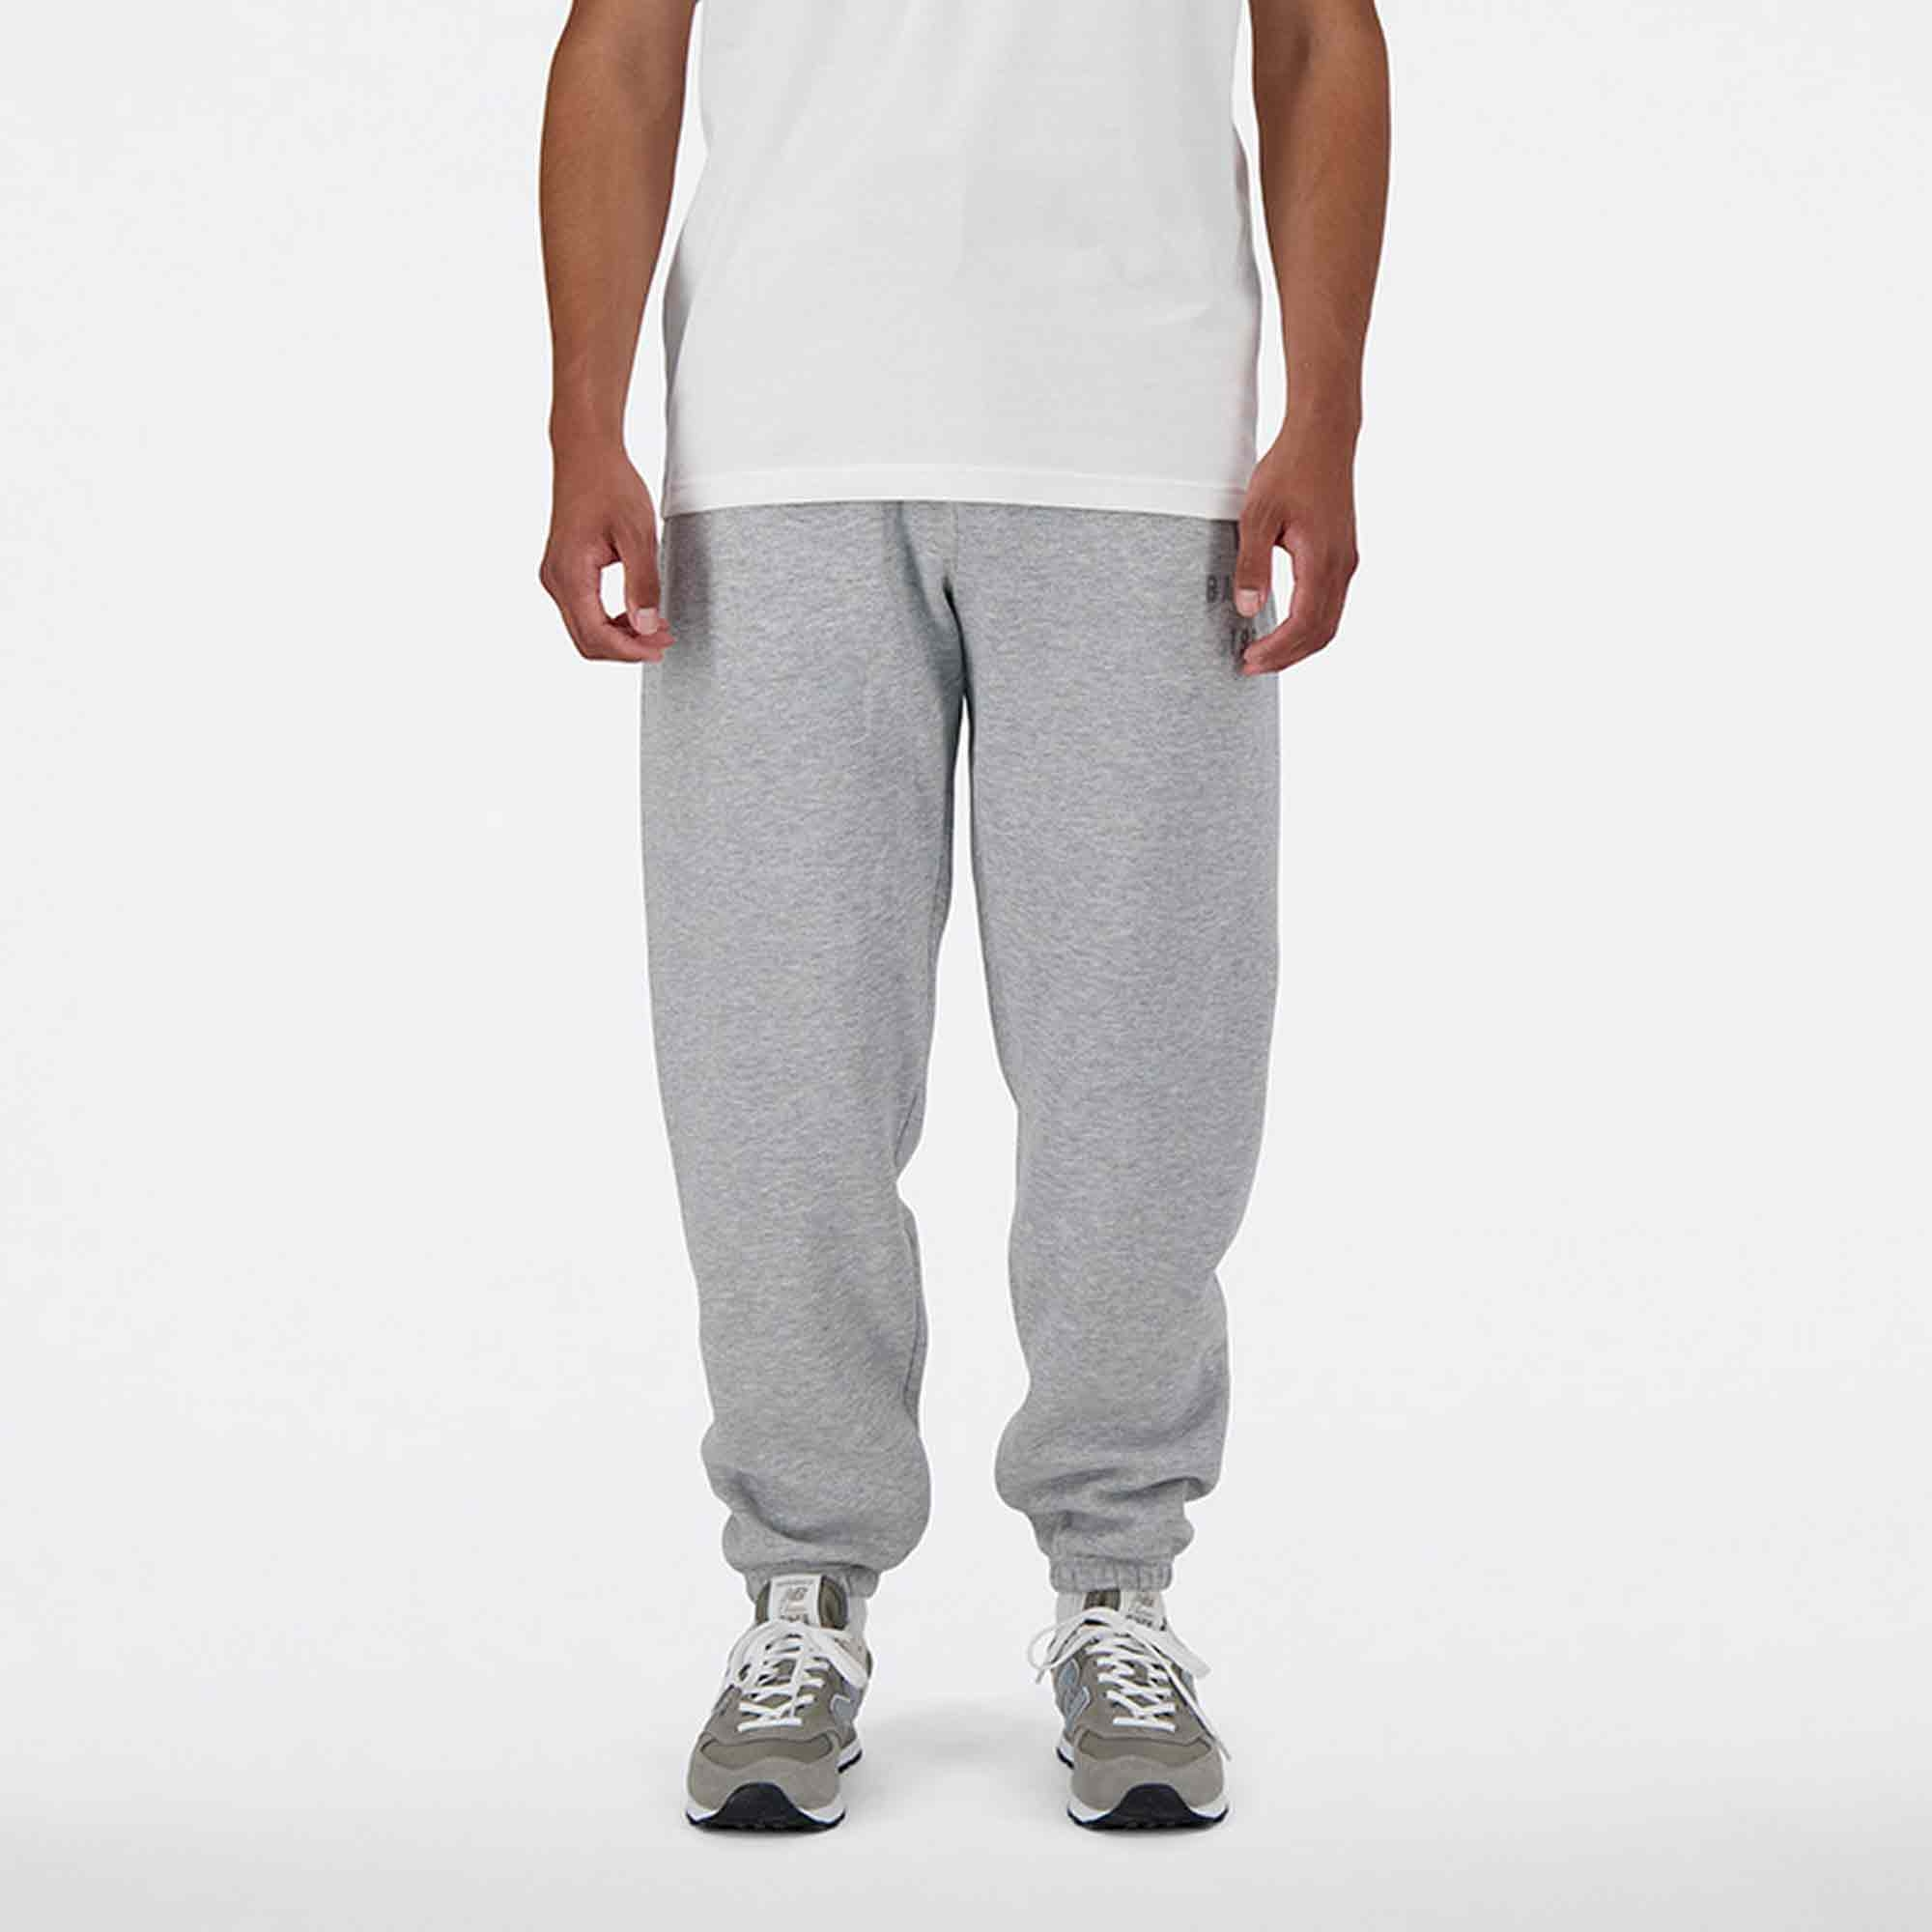 New Balance Mens Graphic Fleece Pant